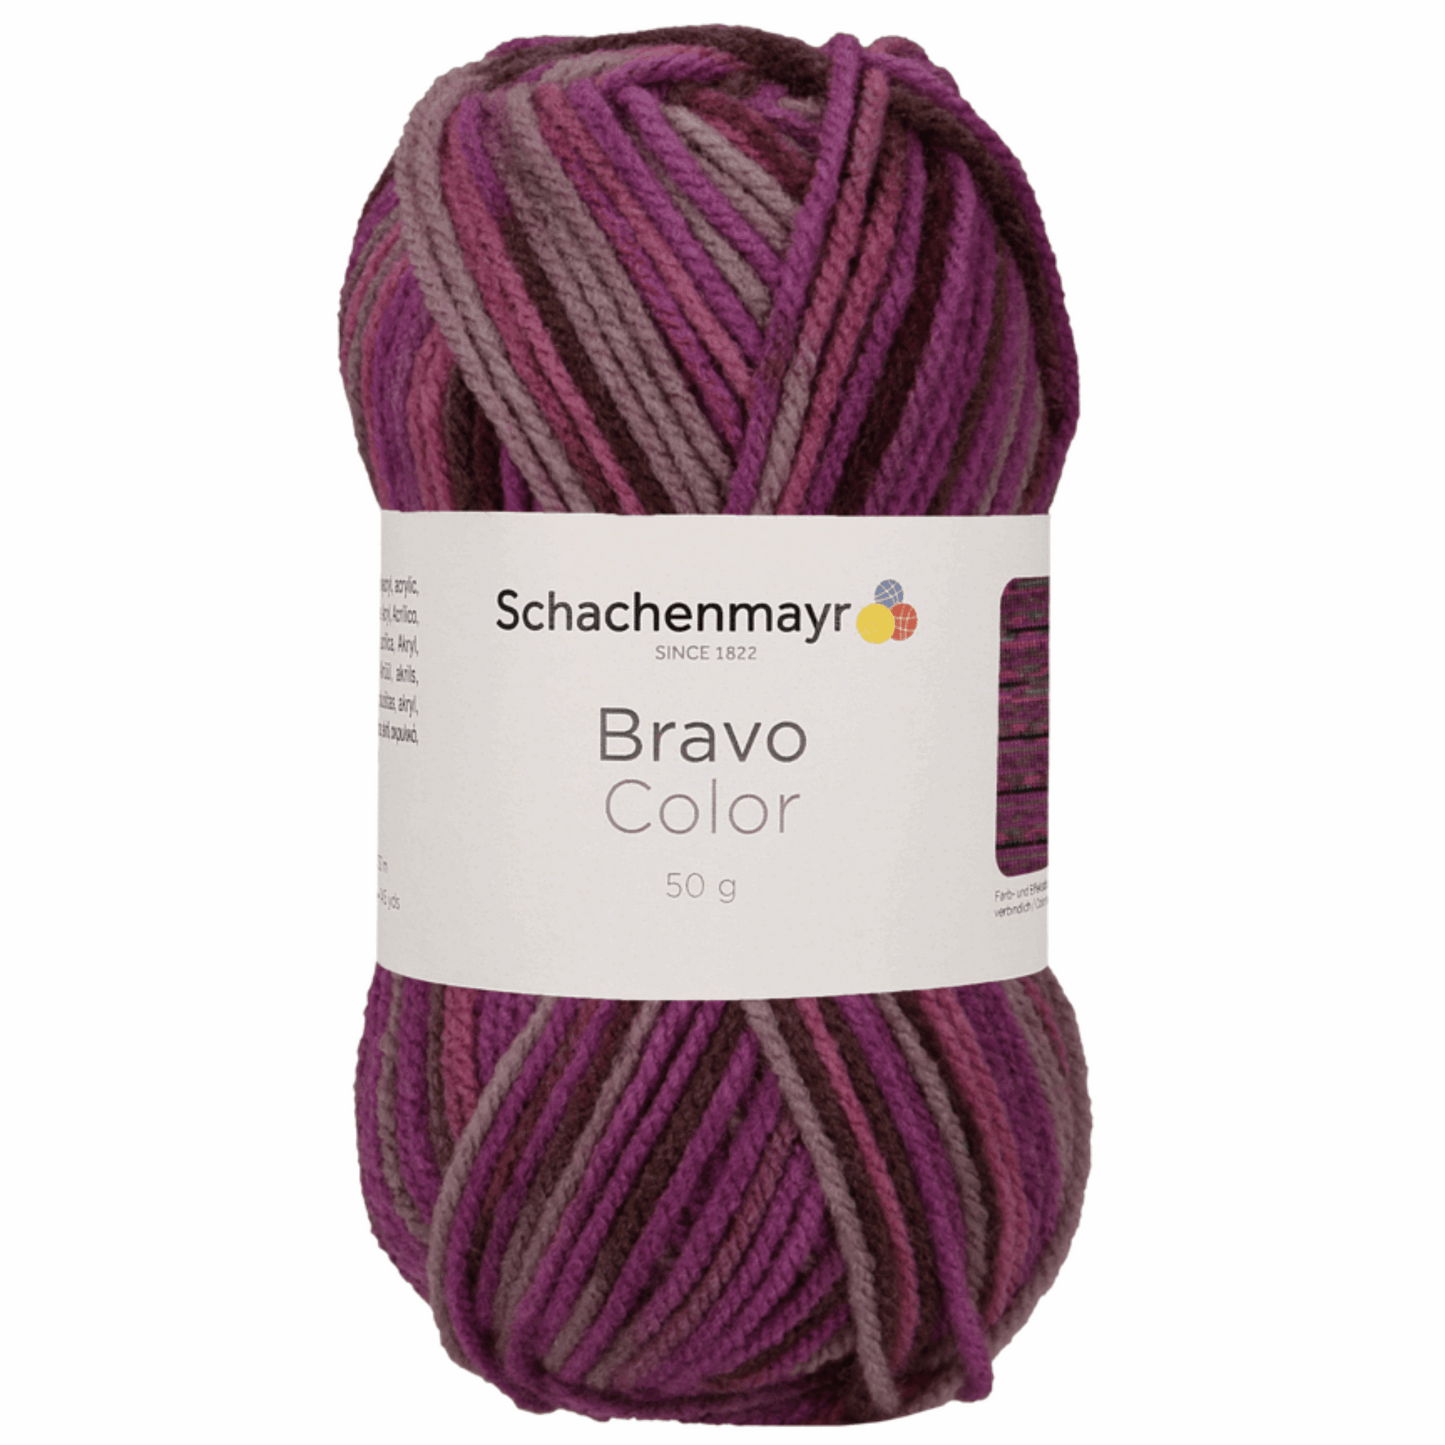 Schachenmayr Bravo50g, 90421, color Berry2088